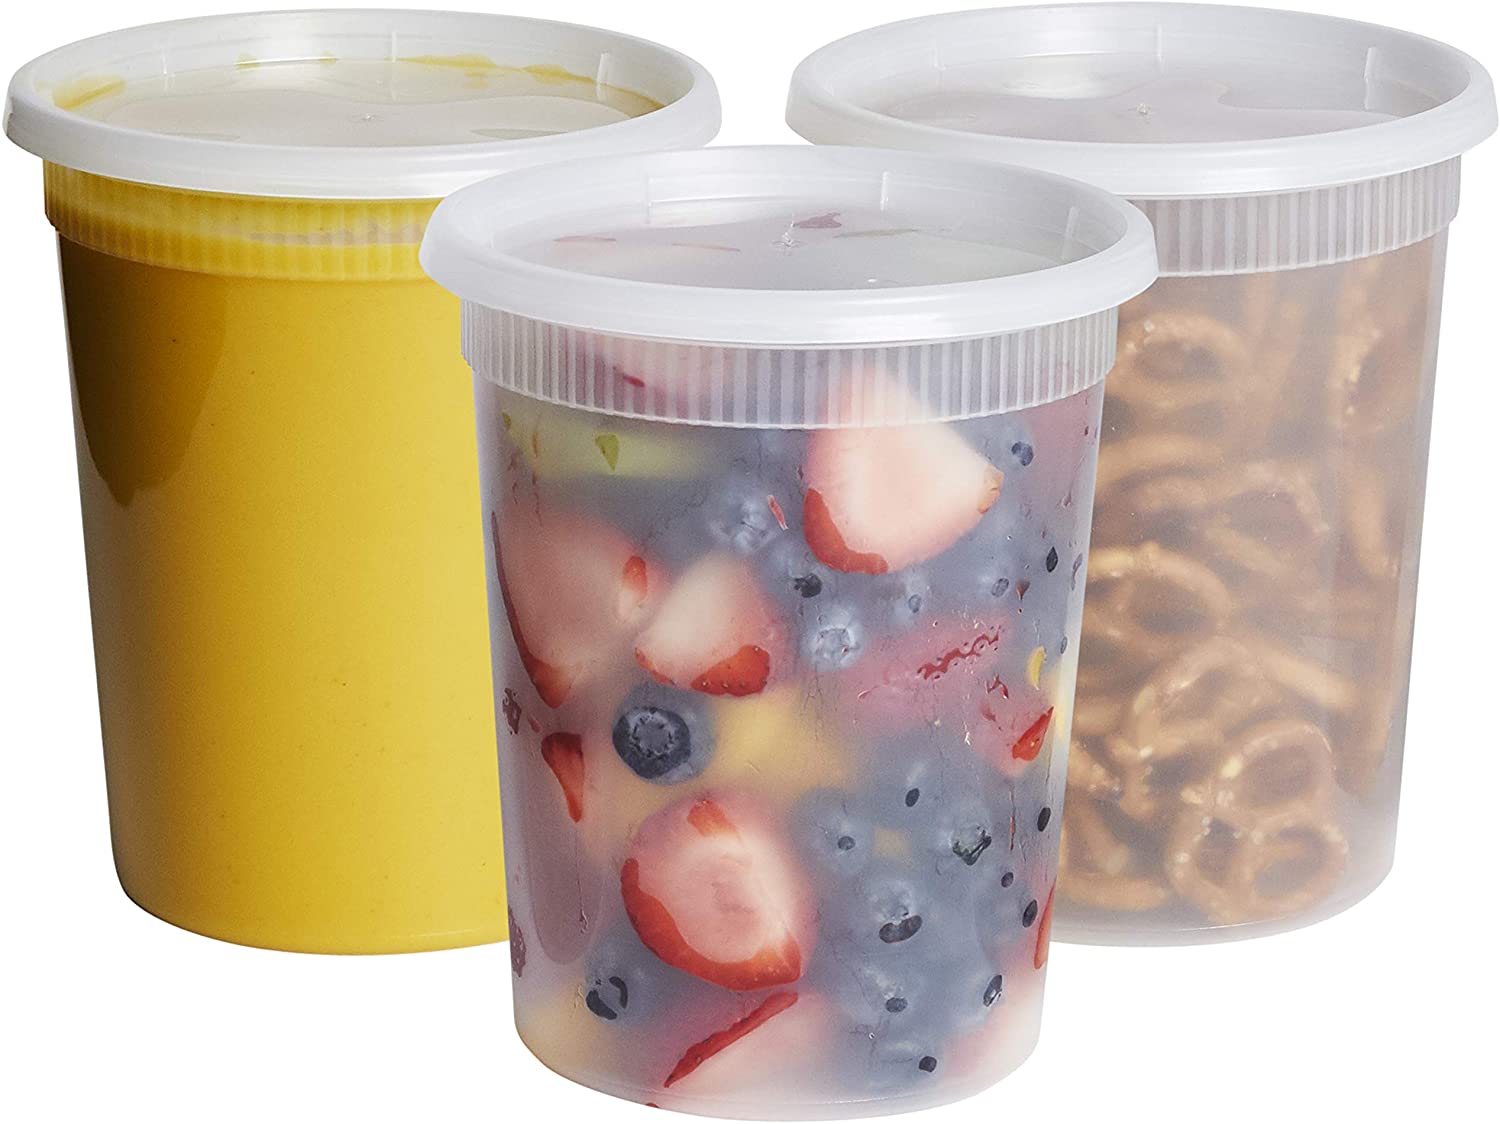 https://www.dontwasteyourmoney.com/wp-content/uploads/2022/01/comfy-package-dishwasher-safe-plastic-soup-containers-with-lids-24-sets-plastic-soup-containers-with-lids.jpg